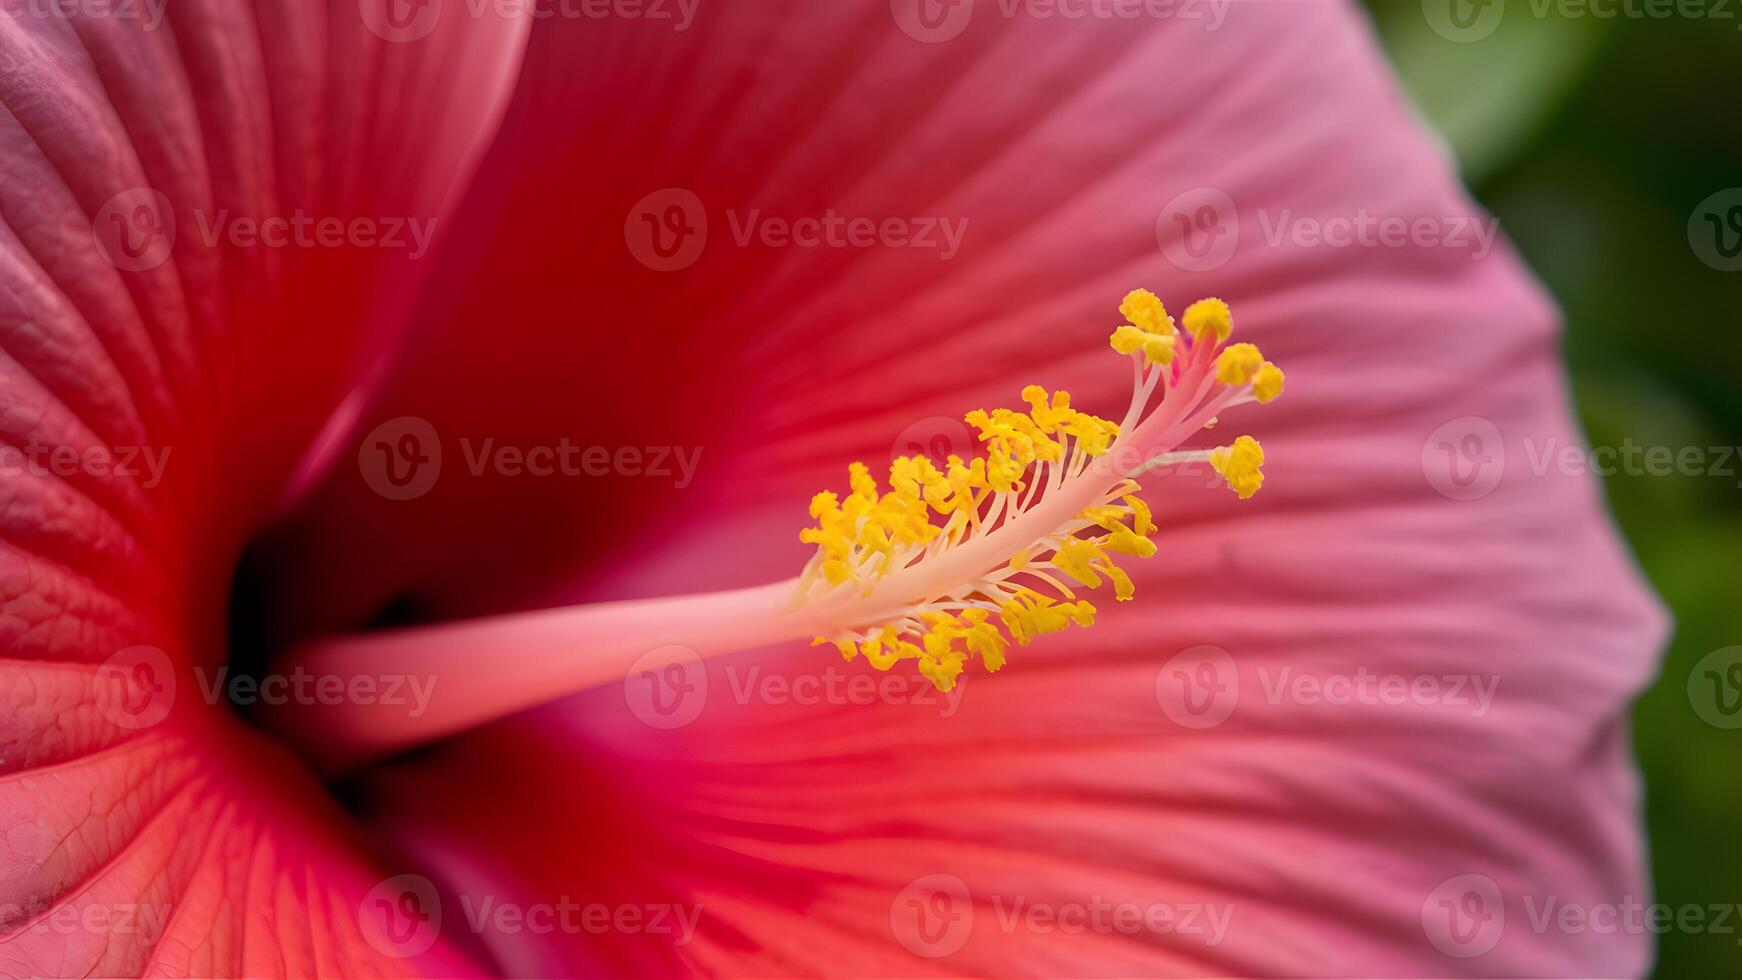 ai gegenereerd details van hibiscus bloem stigma en stuifmeel in macro visie foto